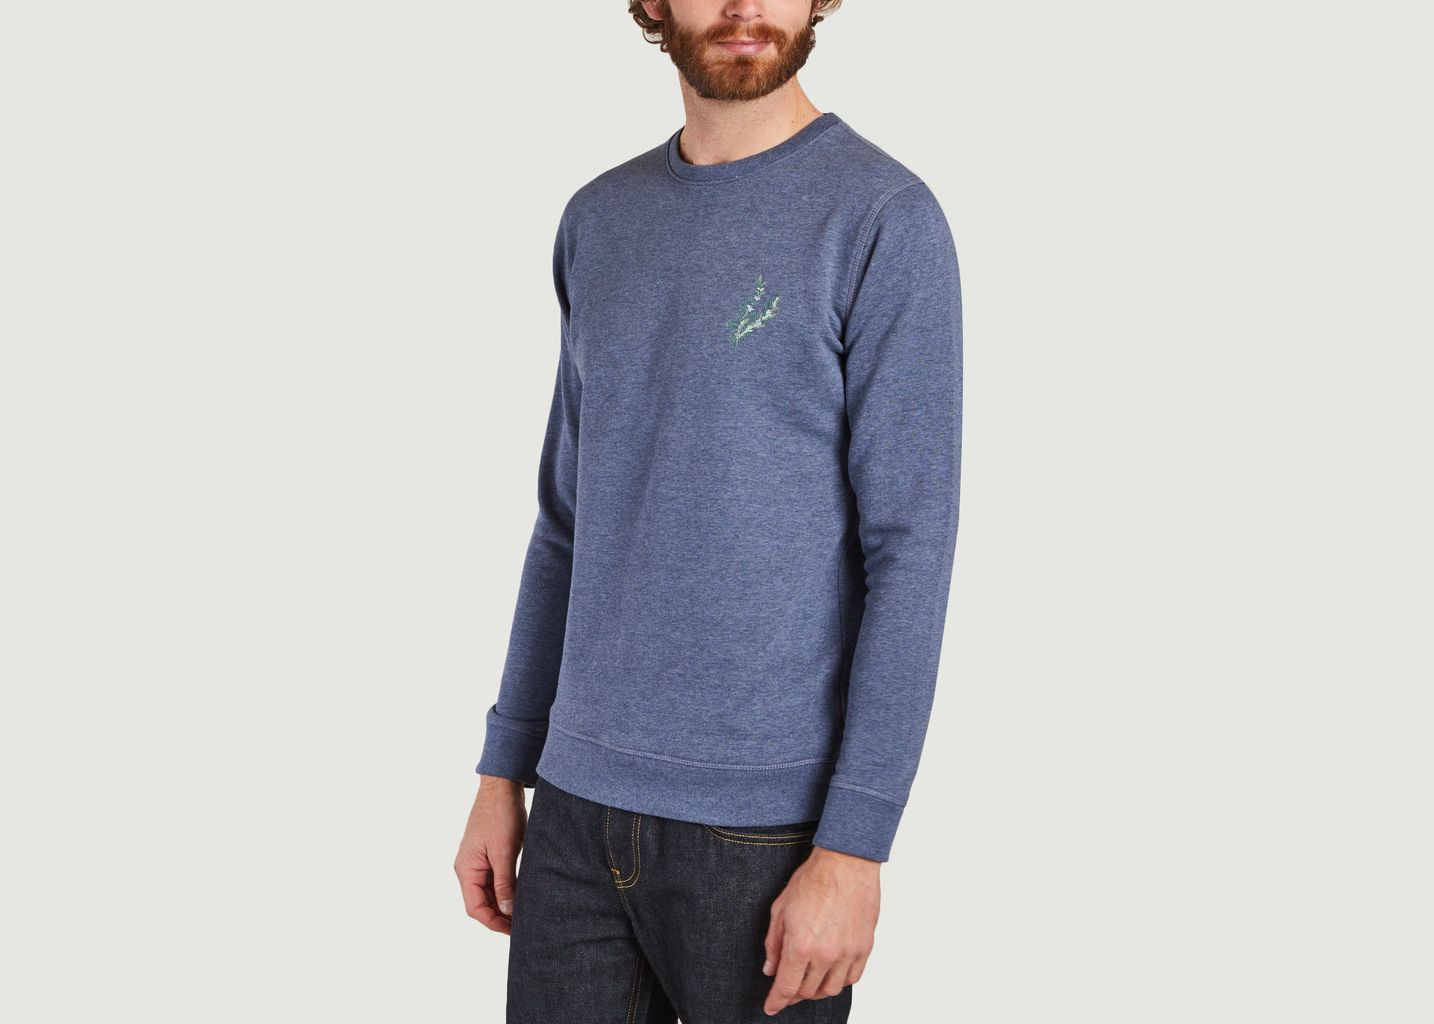 Rosemary embroidered sweatshirt - Johnny Romance